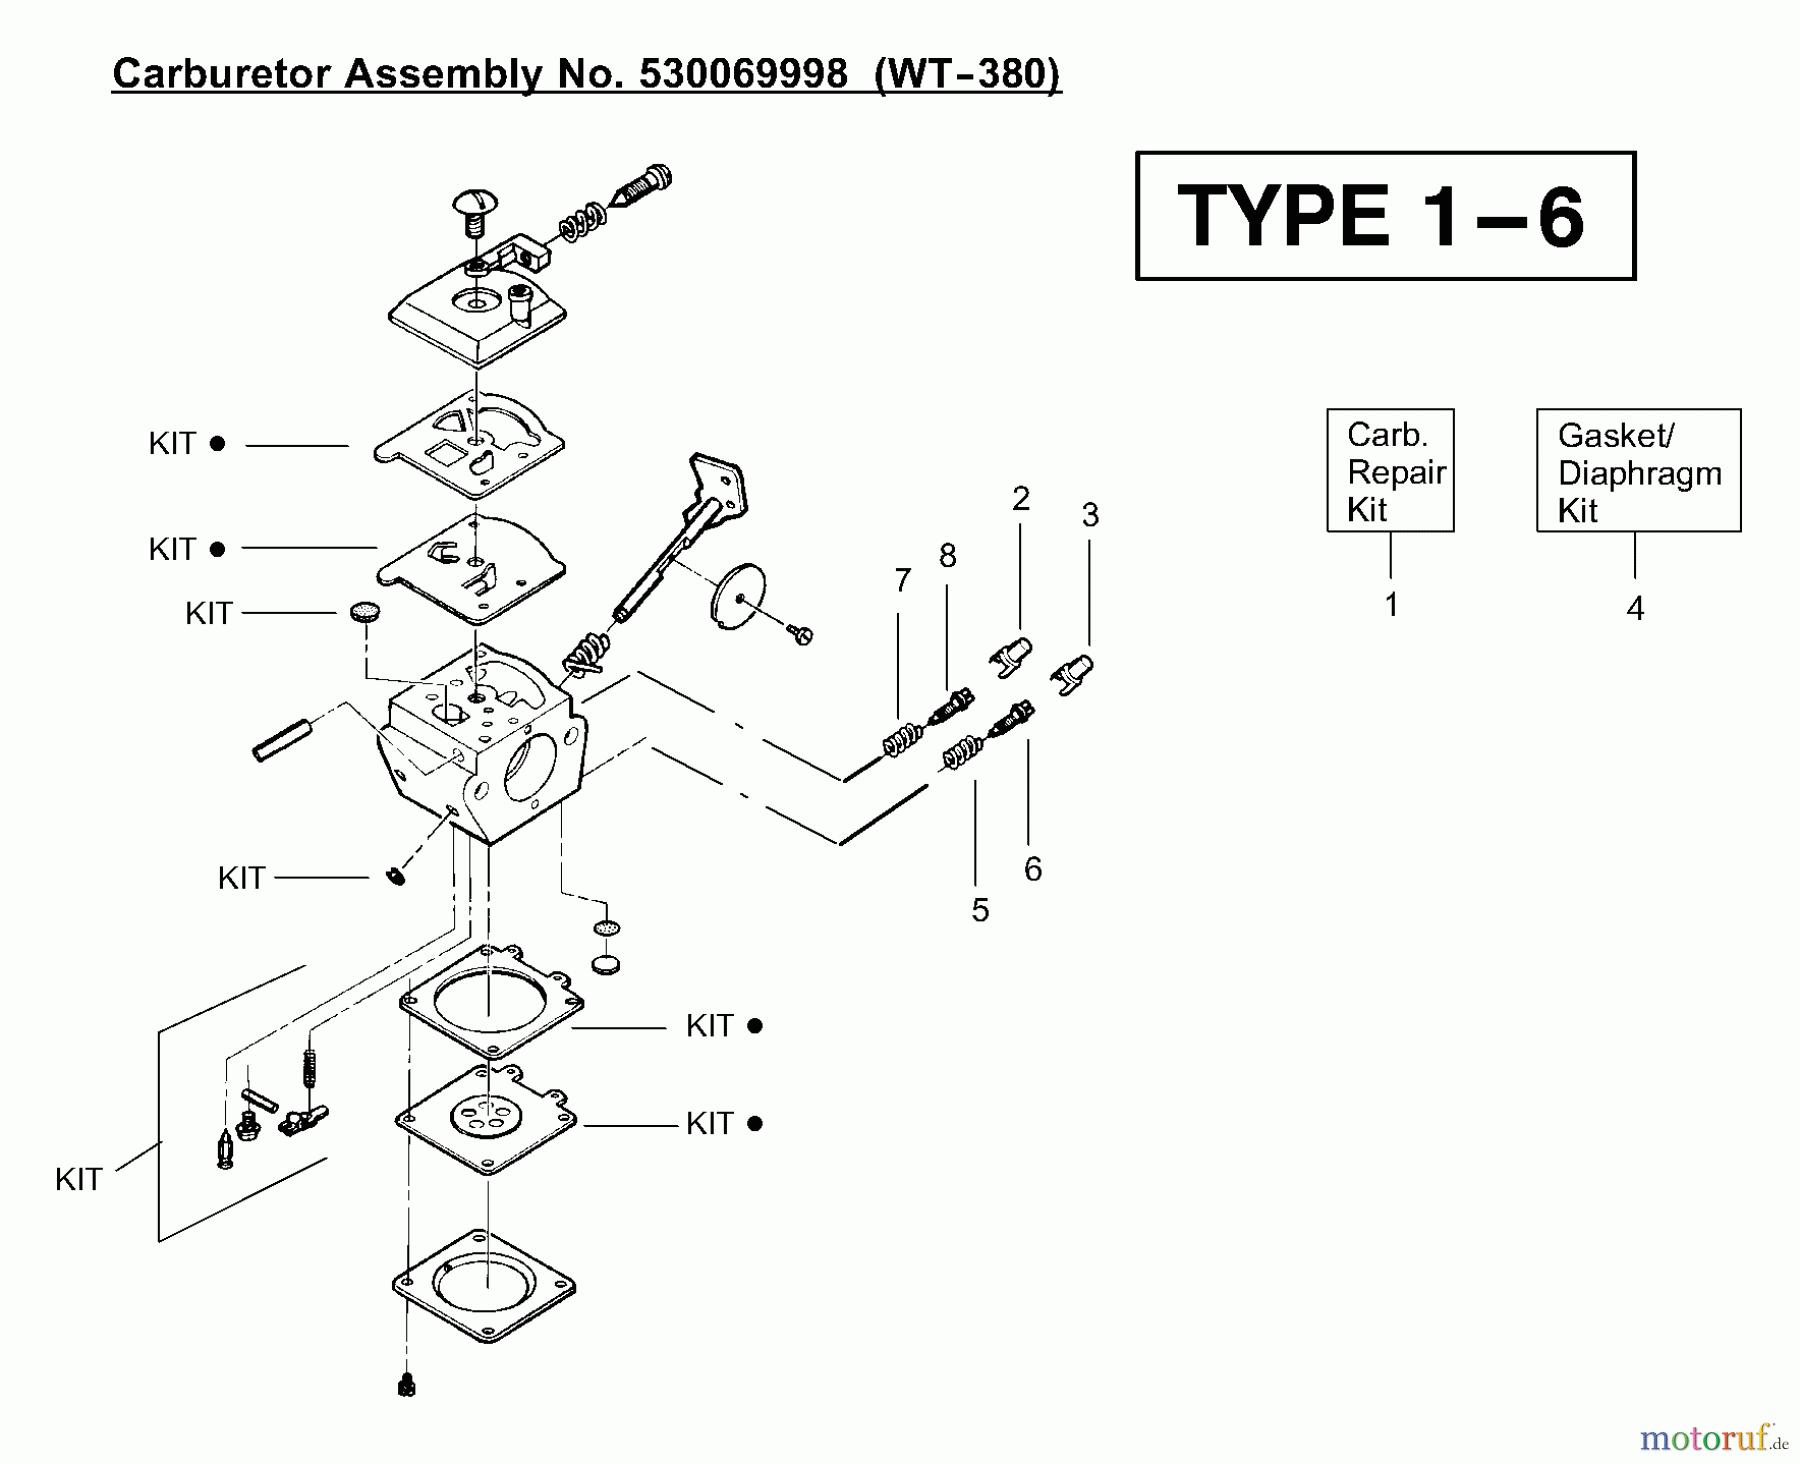  Poulan / Weed Eater Motorsensen, Trimmer BC2400 (Type 4) - Weed Eater String Trimmer Carburetor Assembly (WT380) 530069998